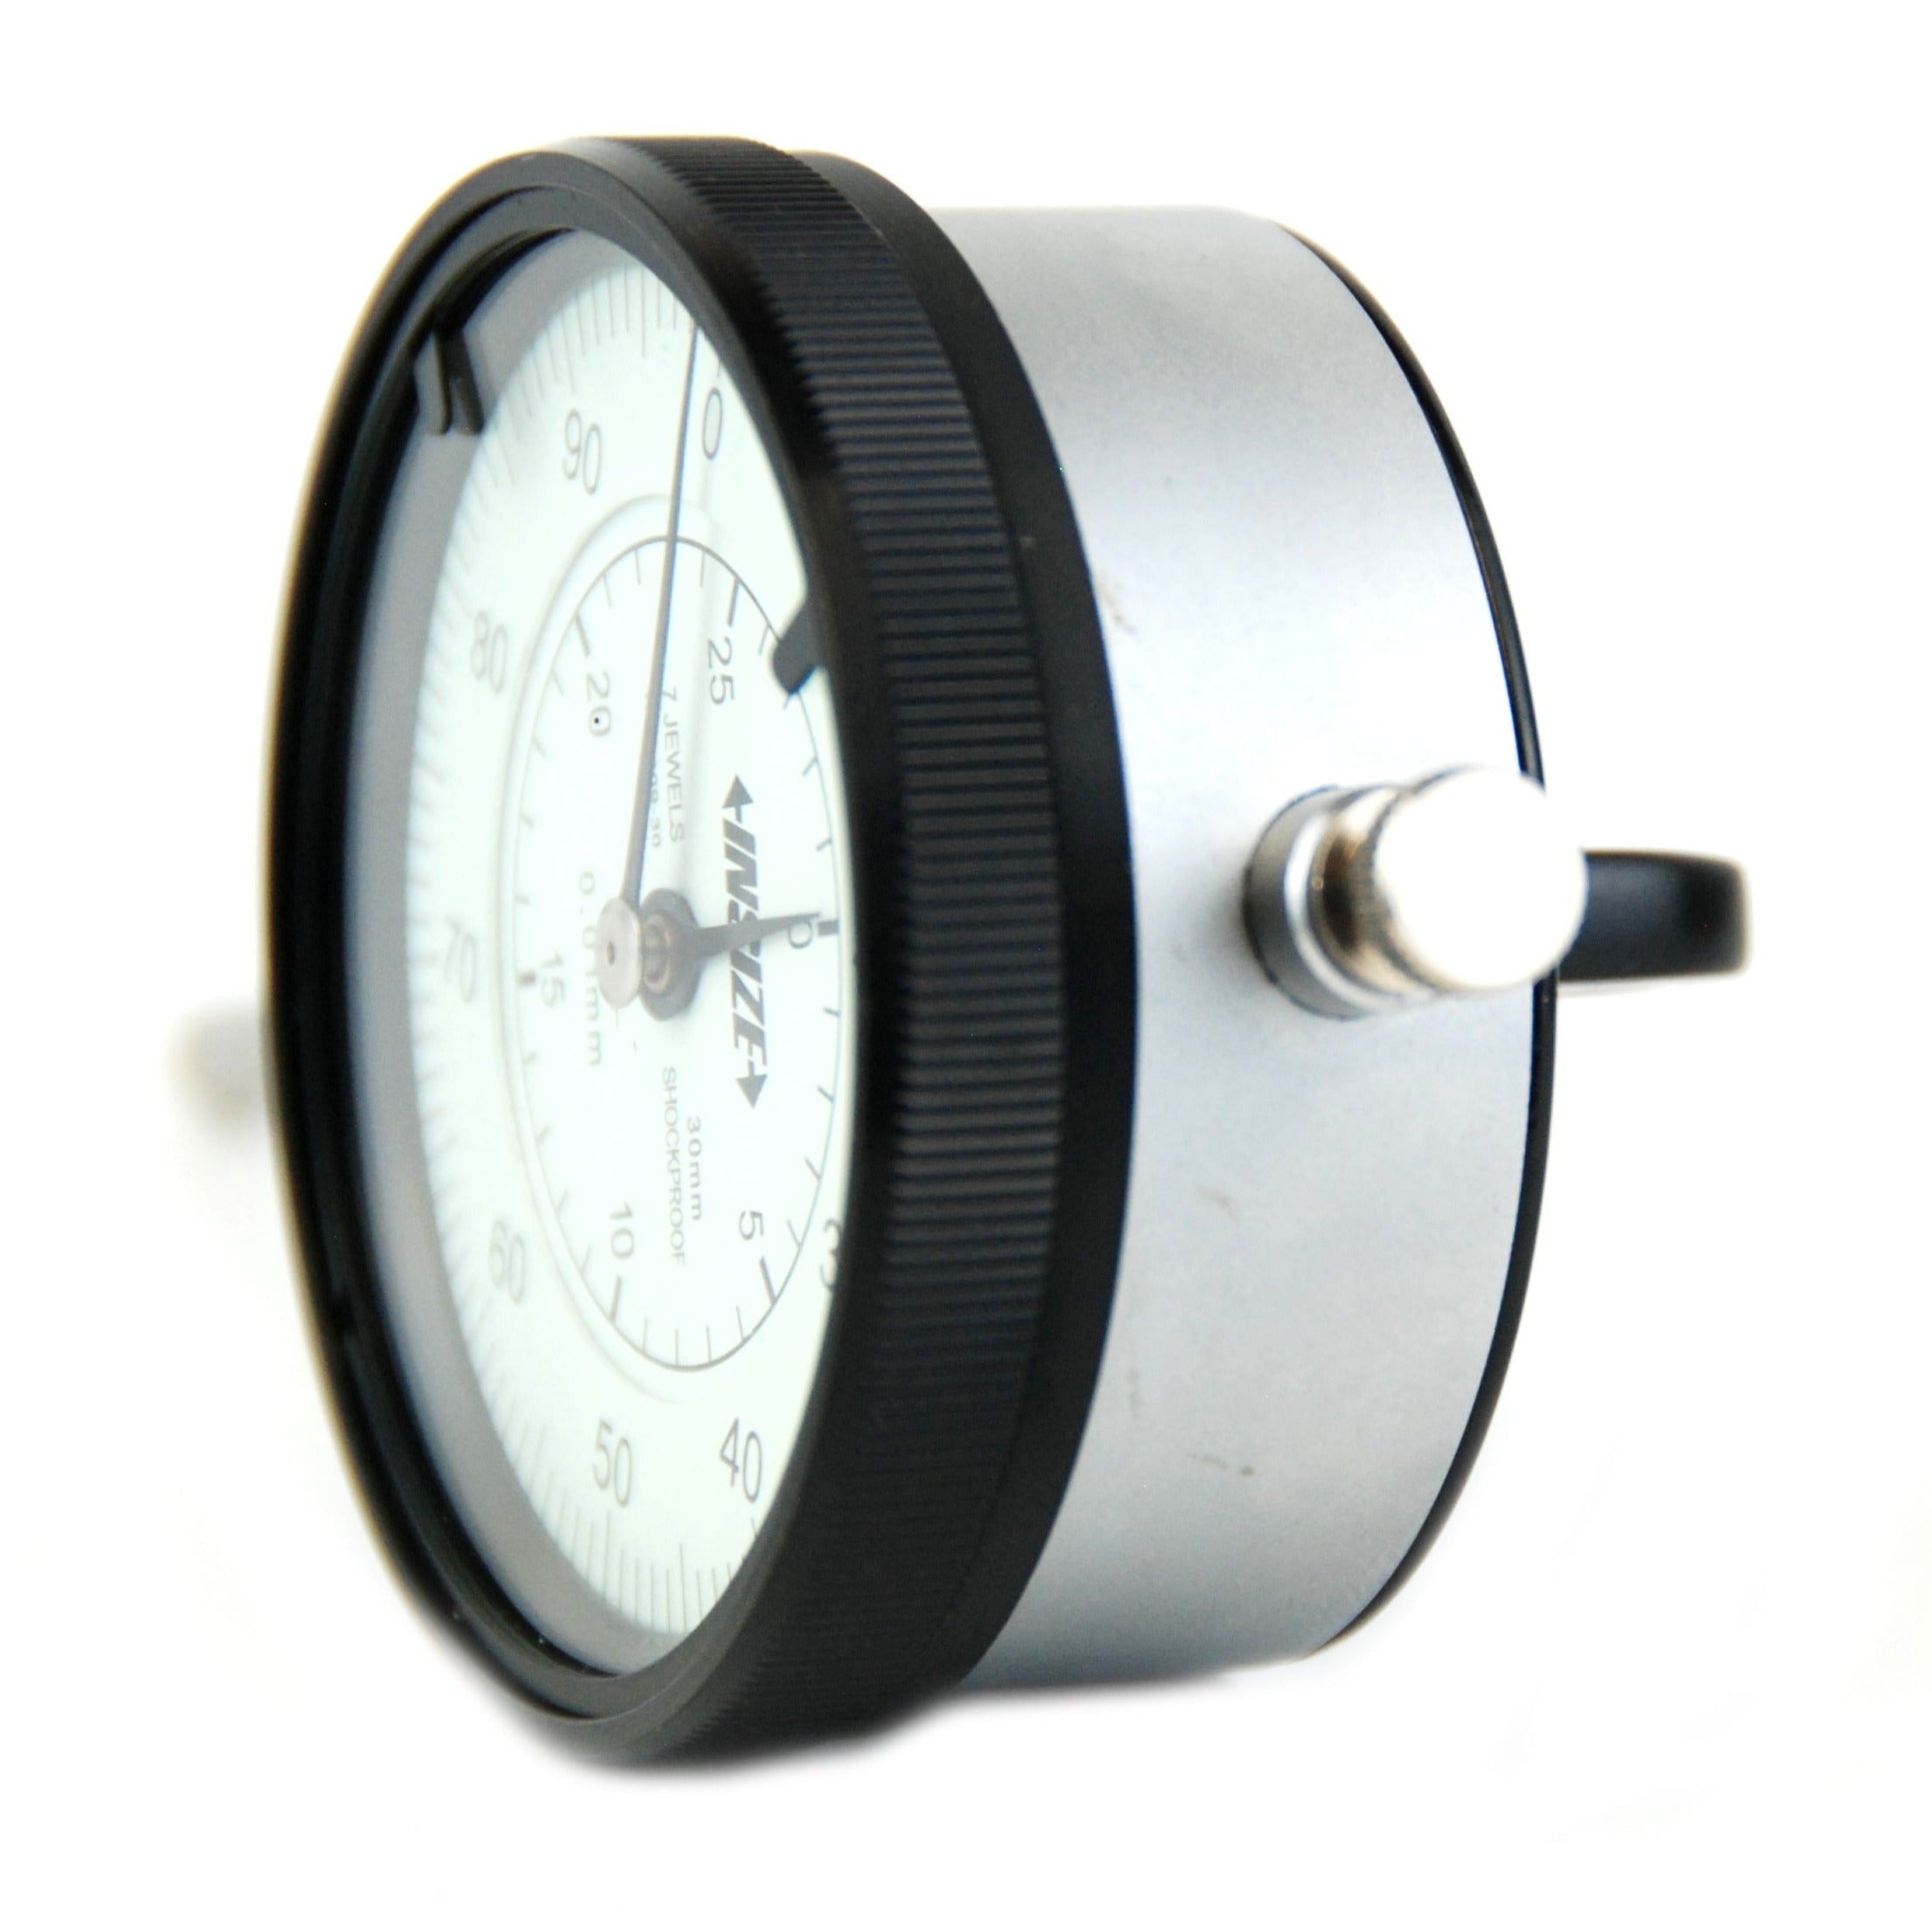 Insize Metric Long Stroke Dial Indicator 30mm Range Series 2309-30